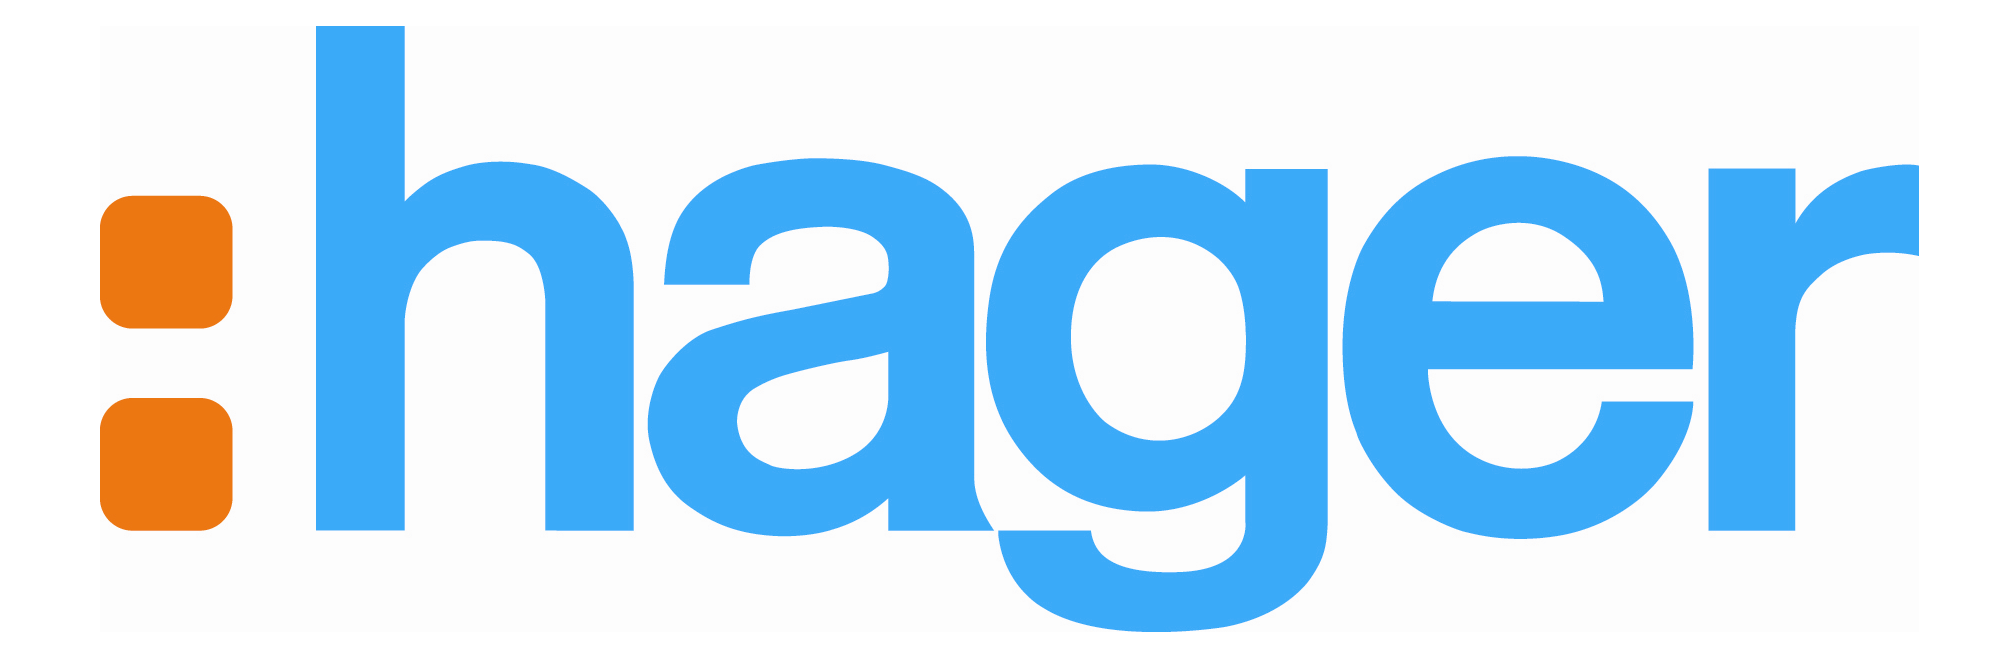 Hager_logo_logotype_emblem.png